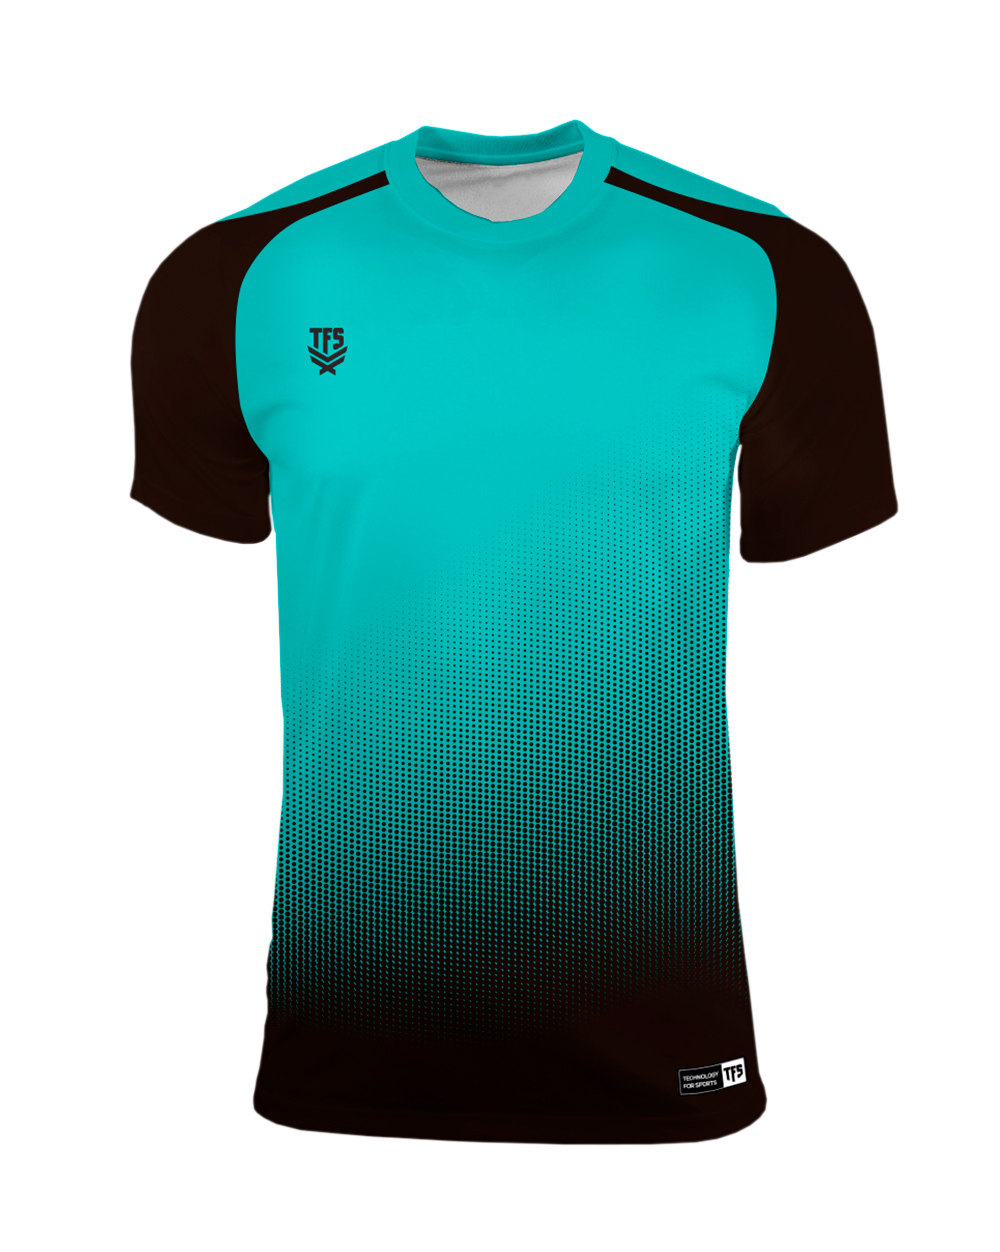 Camiseta Niños Futbol TFS Holanda - - Camisetas